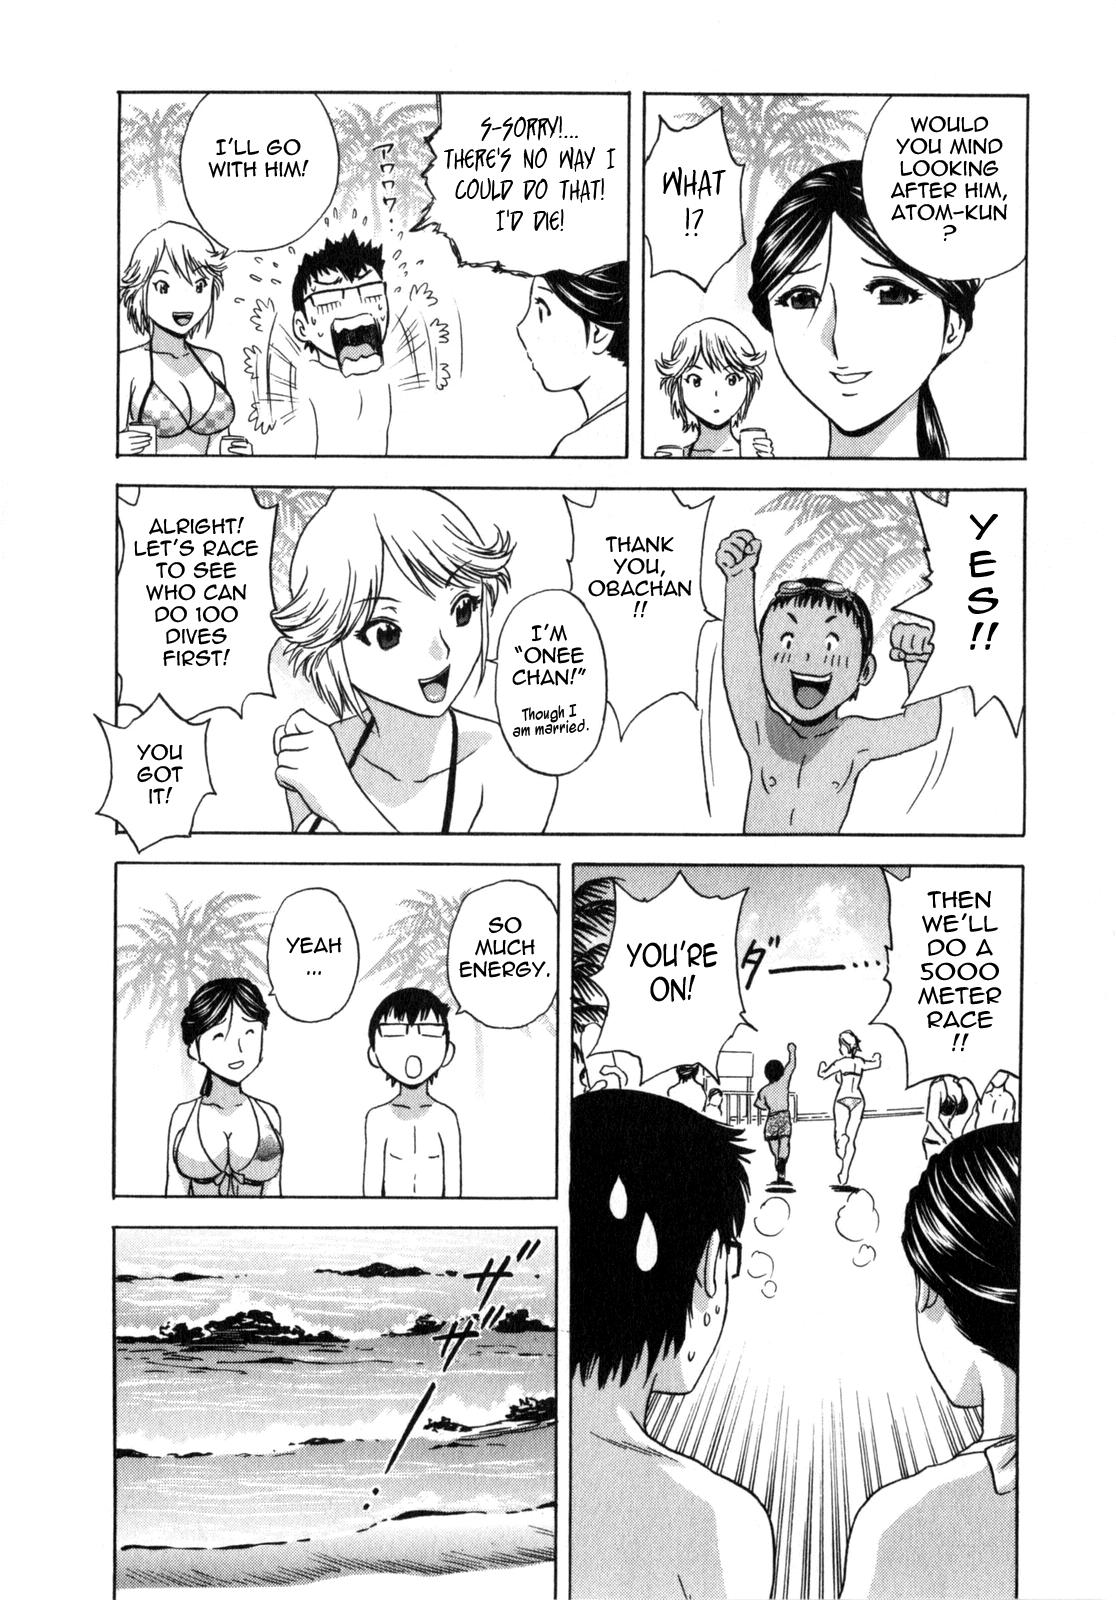 [Hidemaru] Life with Married Women Just Like a Manga 1 - Ch. 1-9 [English] {Tadanohito} 128